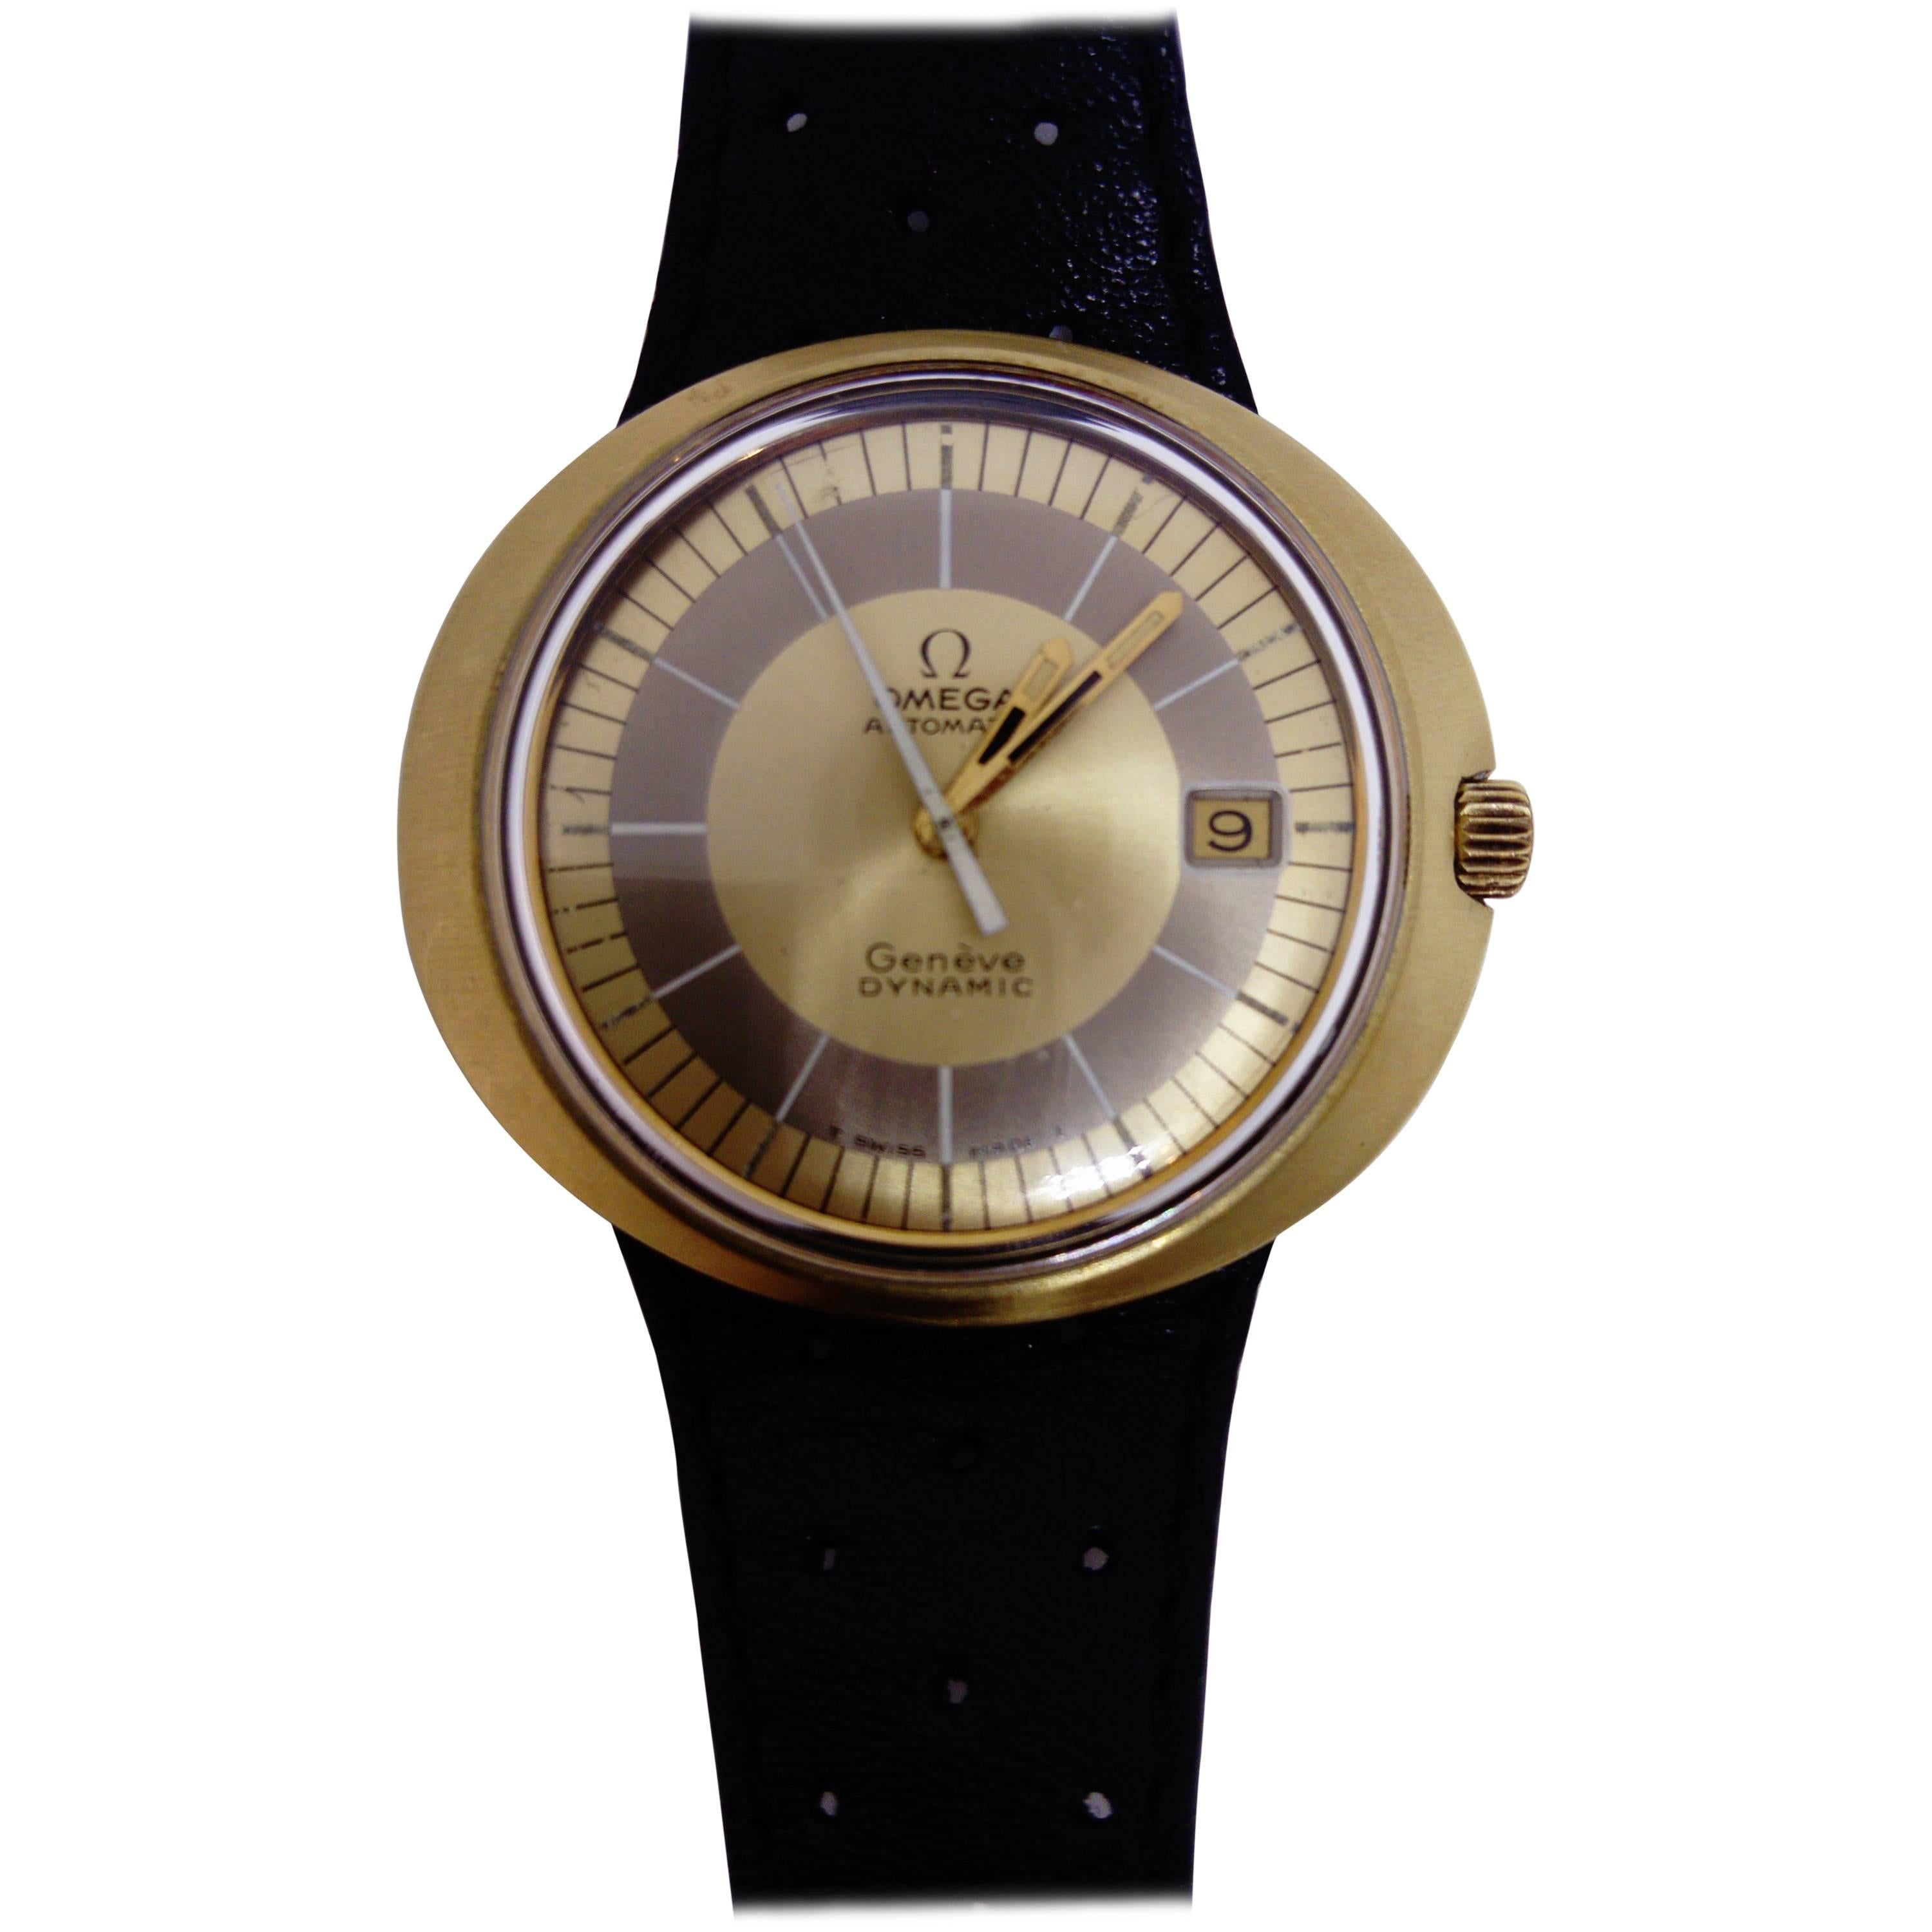 1978 Omega Dynamique Wristwatch For Sale